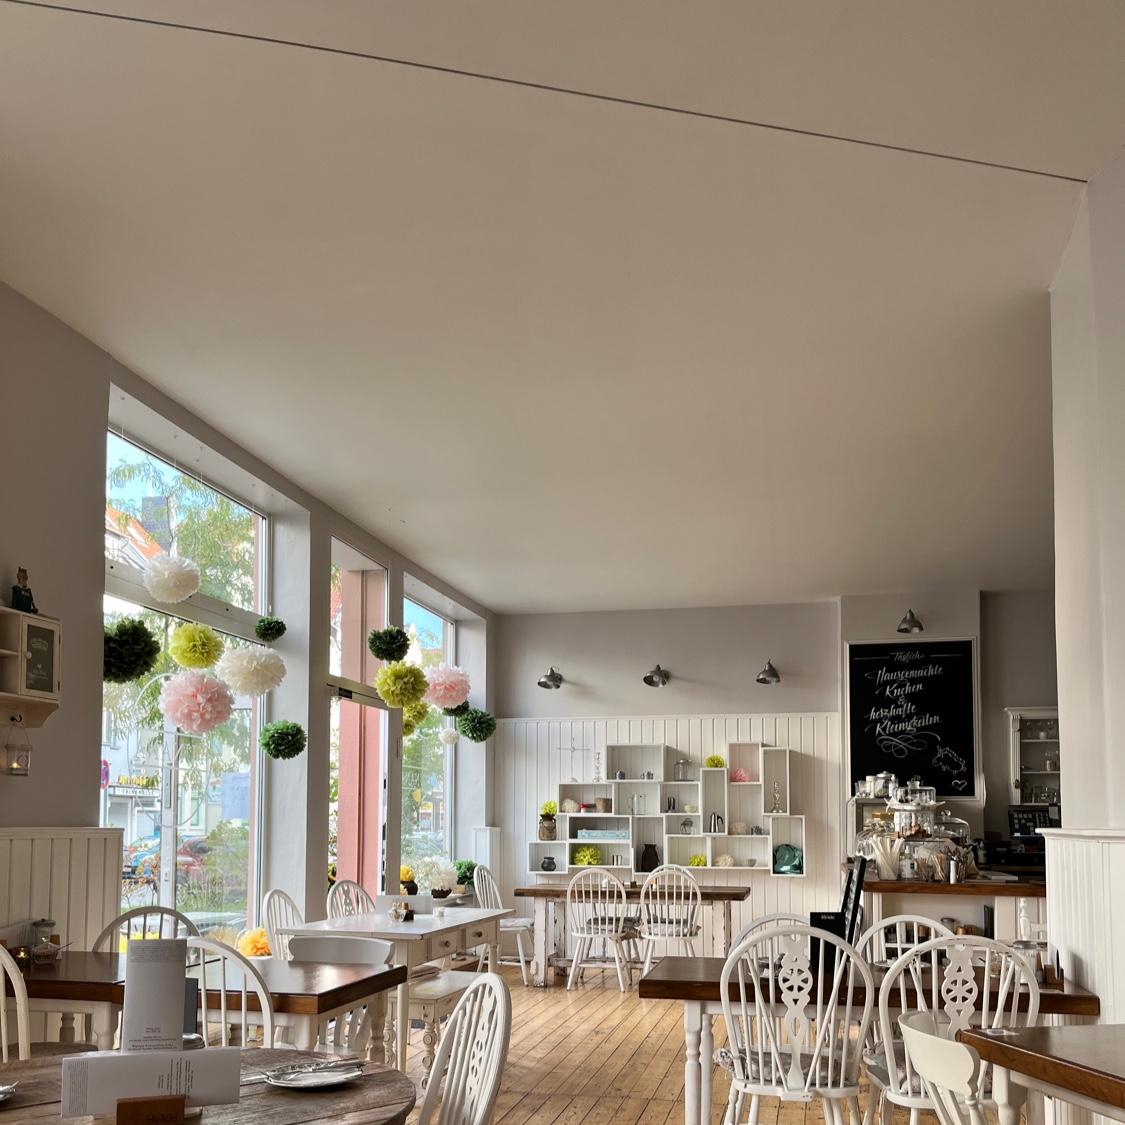 Restaurant "Café Yunana" in Hannover